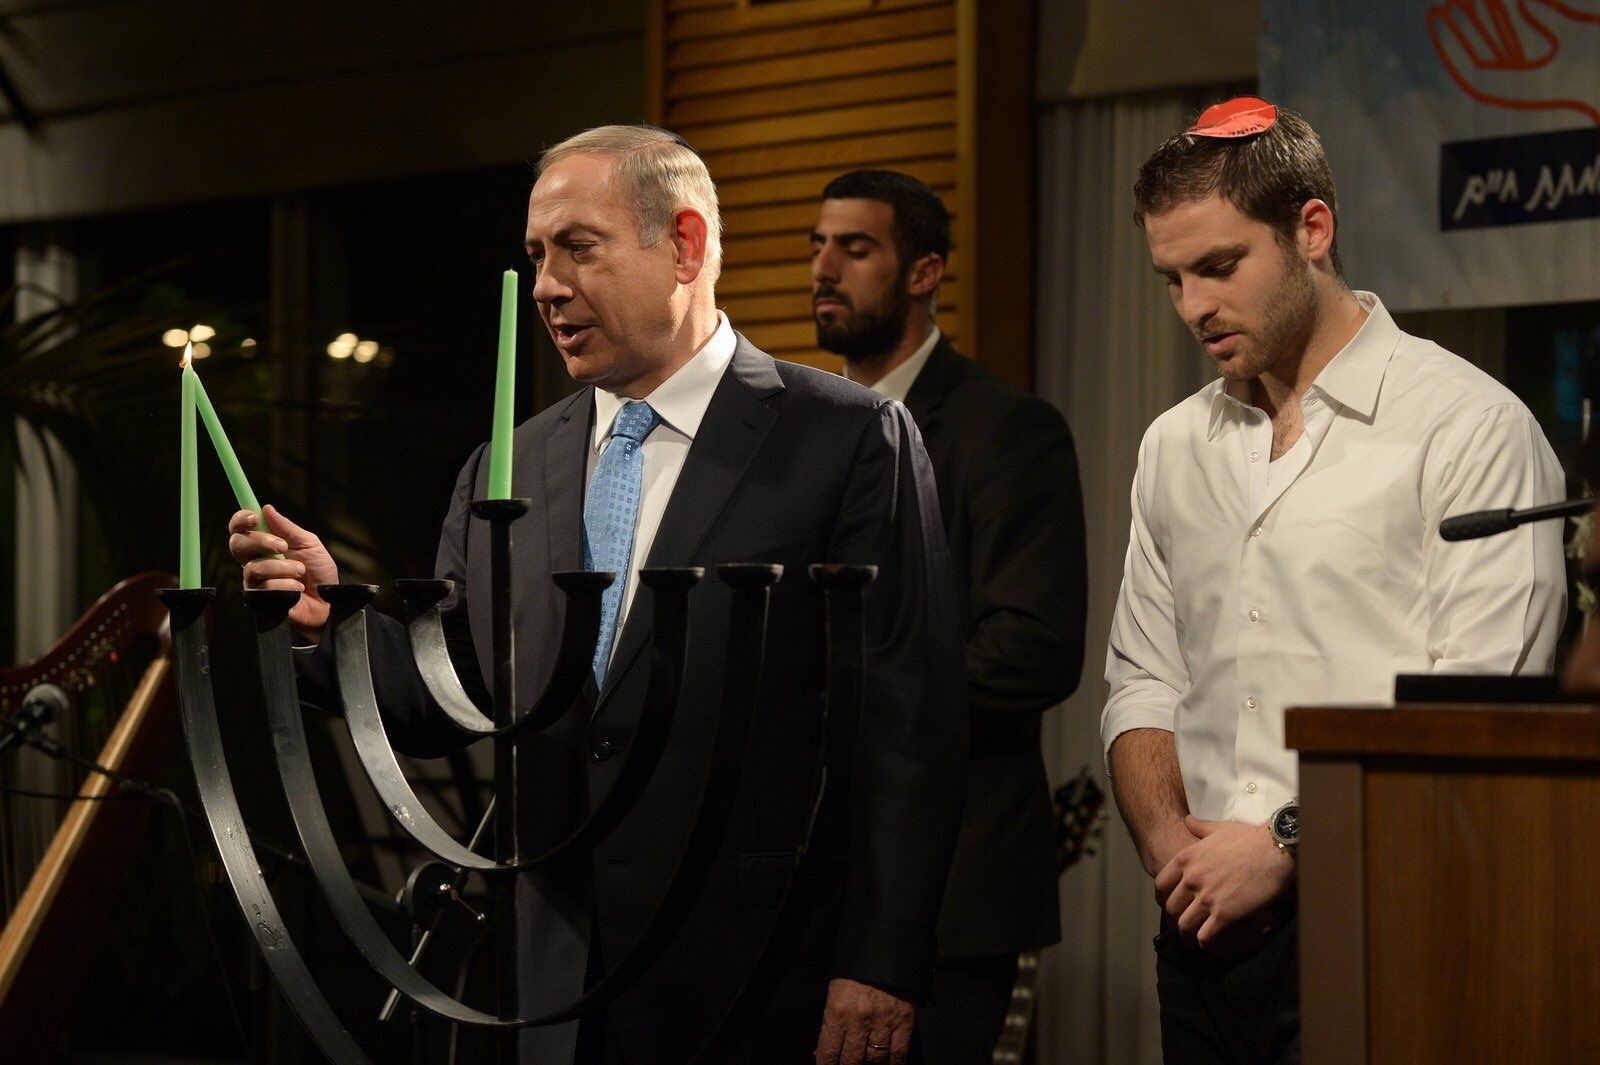 Netanyahu enciende la primera vela del candelabro de la fiesta de Januká. Foto Twitter @netanyahu